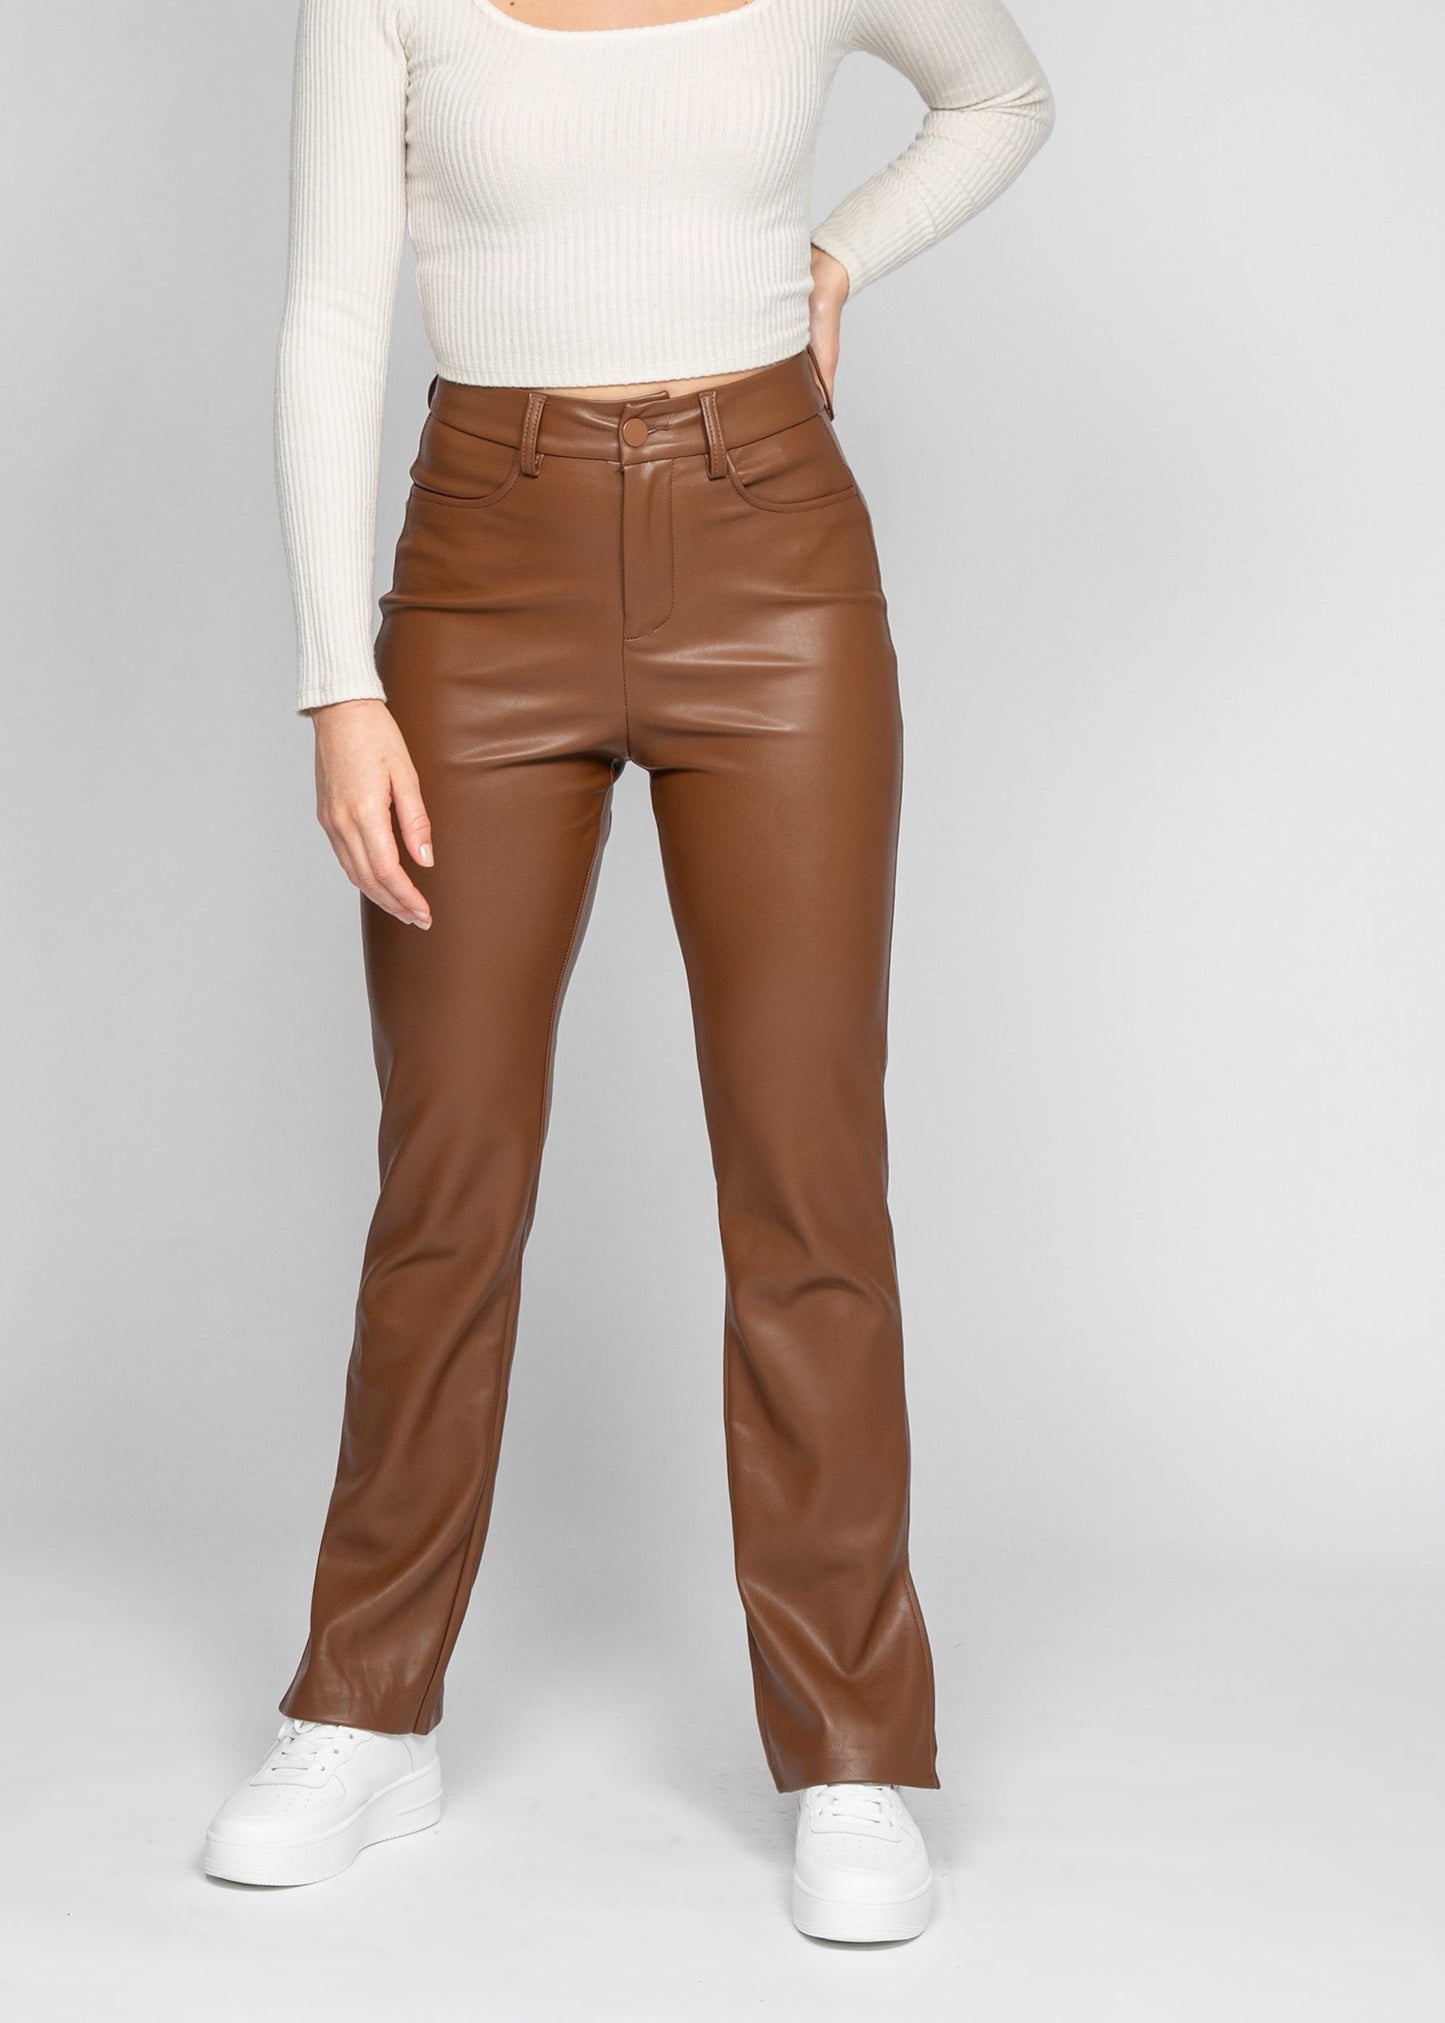 Pantalon en similicuir fendu marron